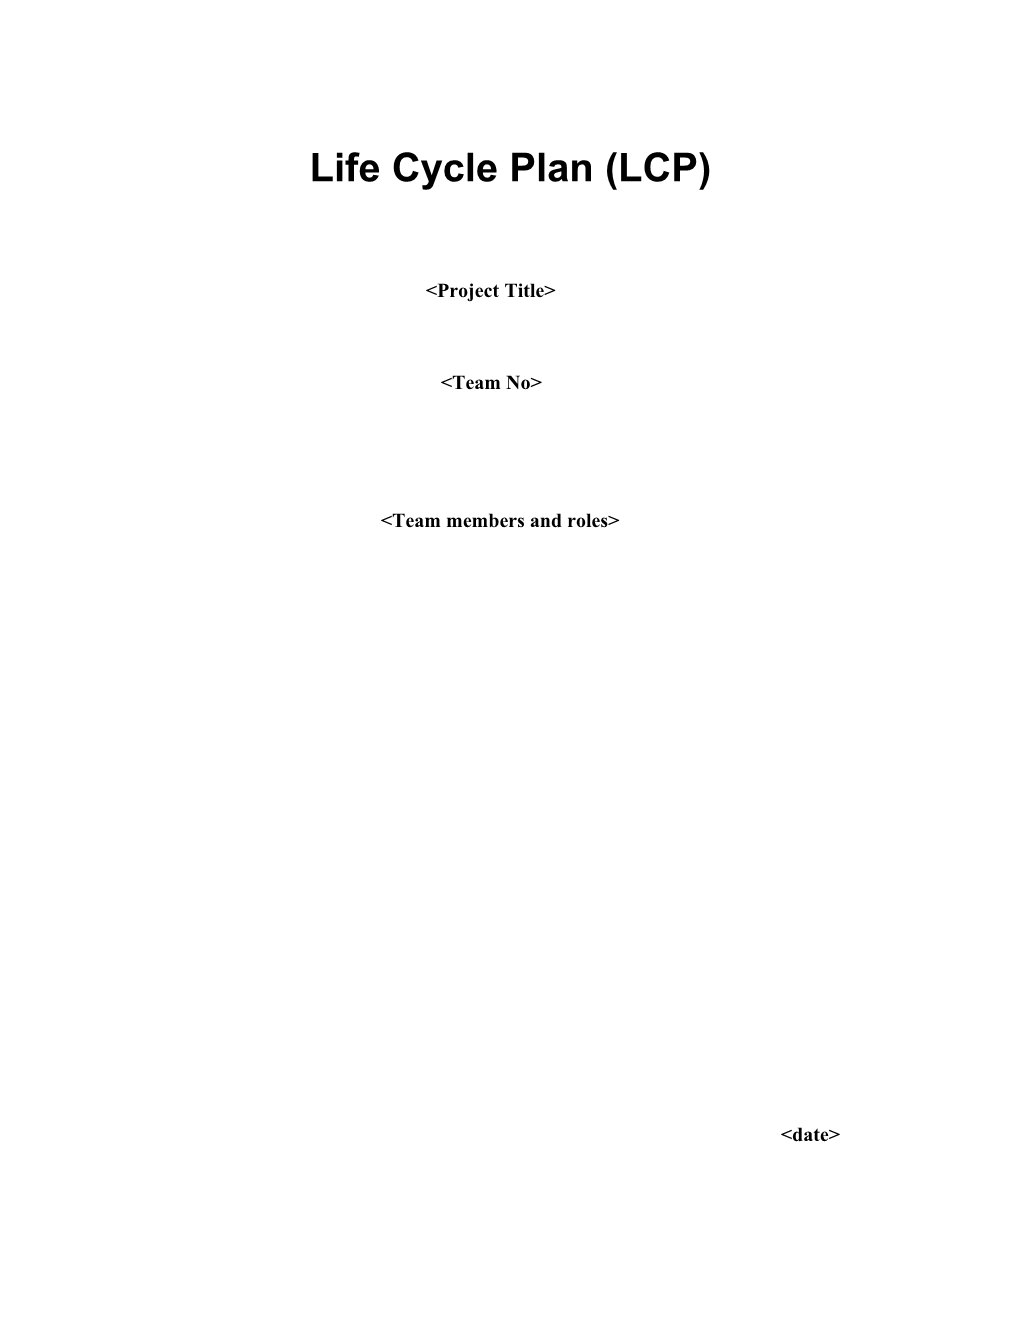 Life Cycle Plan (LCP) Templateversion X.X